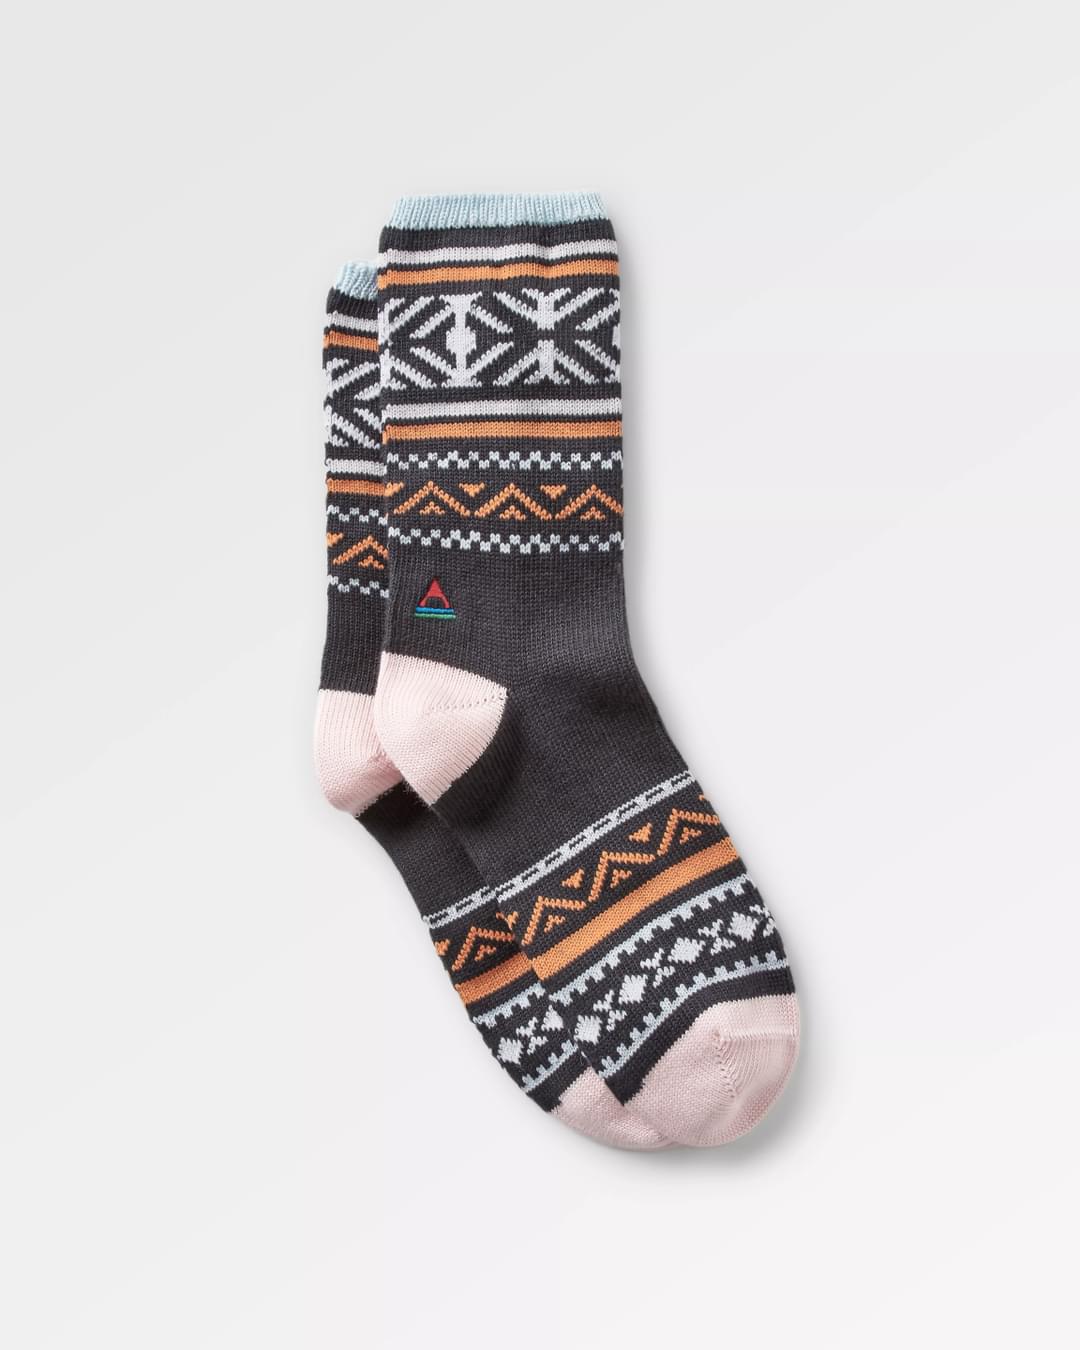 Organic Midweight Patterned Socks - Charcoal